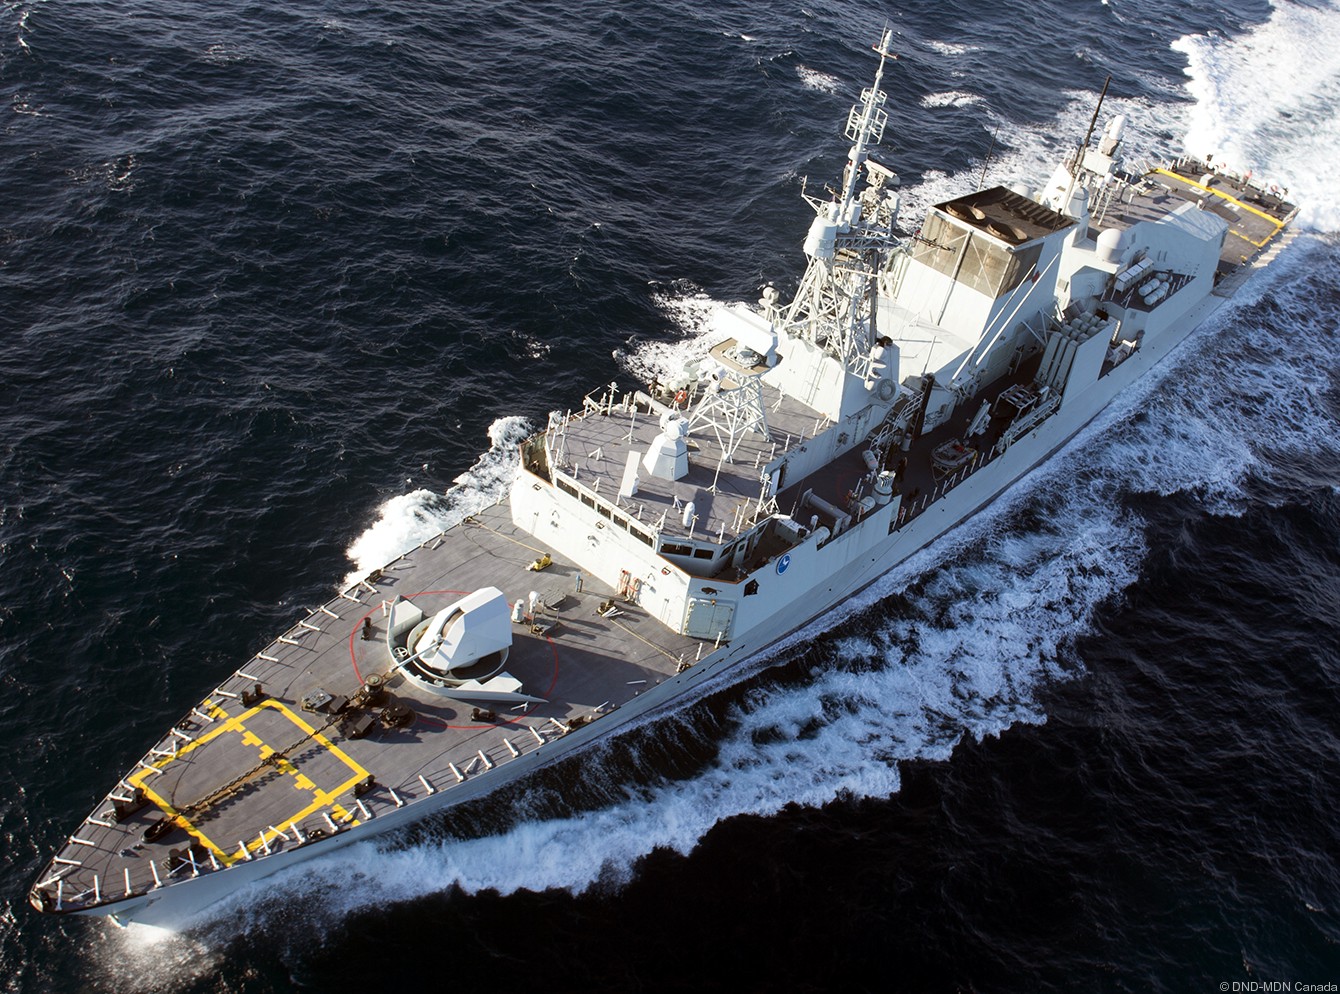 ffh-338 hmcs winnipeg halifax class helicopter patrol frigate ncsm royal canadian navy 63